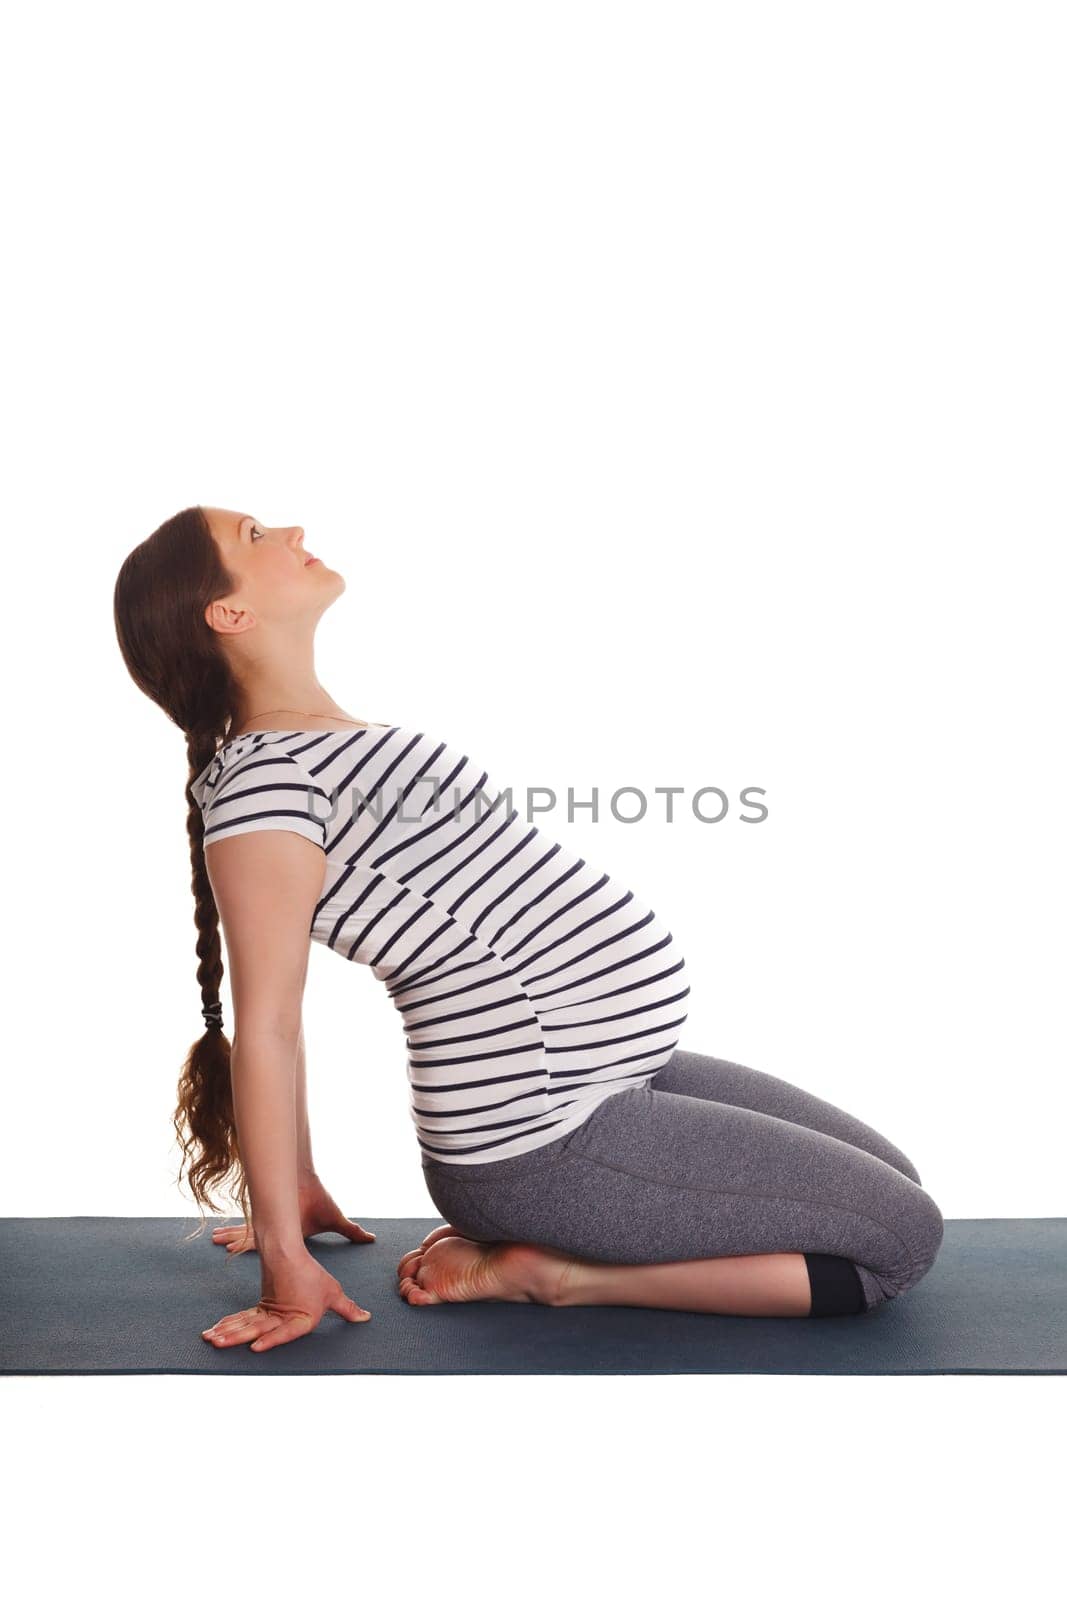 Pregnant woman doing yoga asana Ustrasana by dimol